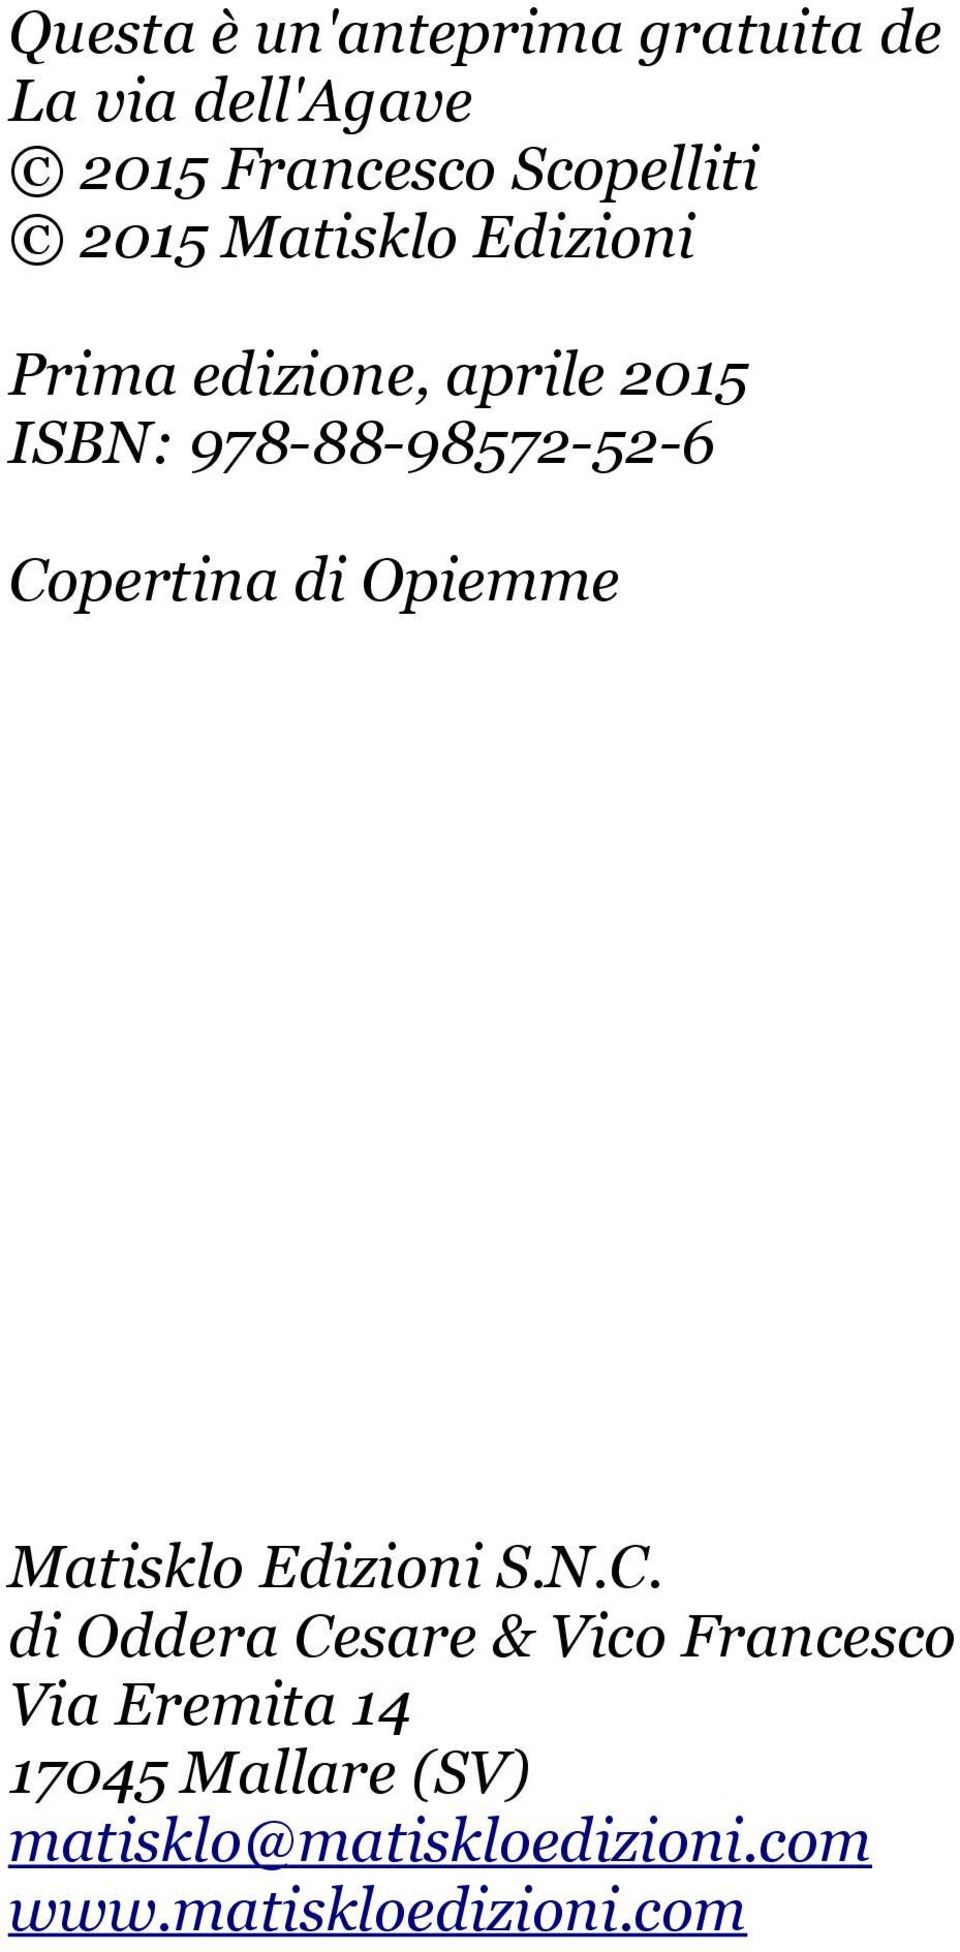 Copertina di Opiemme Matisklo Edizioni S.N.C. di Oddera Cesare & Vico Francesco